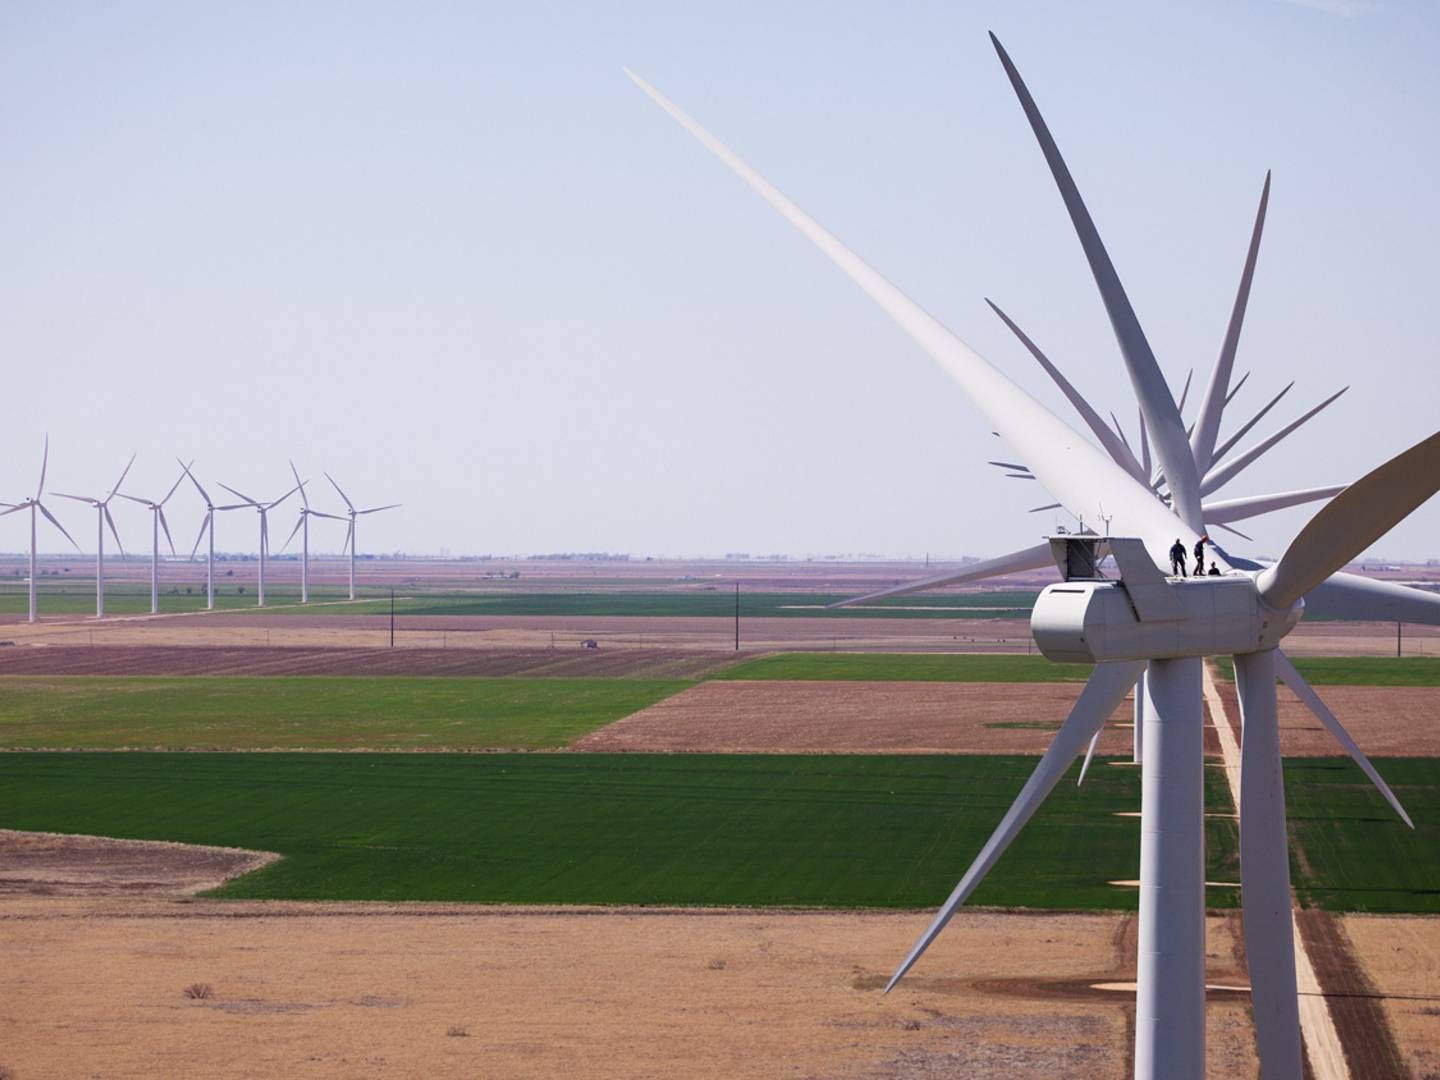 Janikowo will be established using V100-2.0 turbines from Vestas, here seen at a US wind farm. | Photo: Vestas / PR